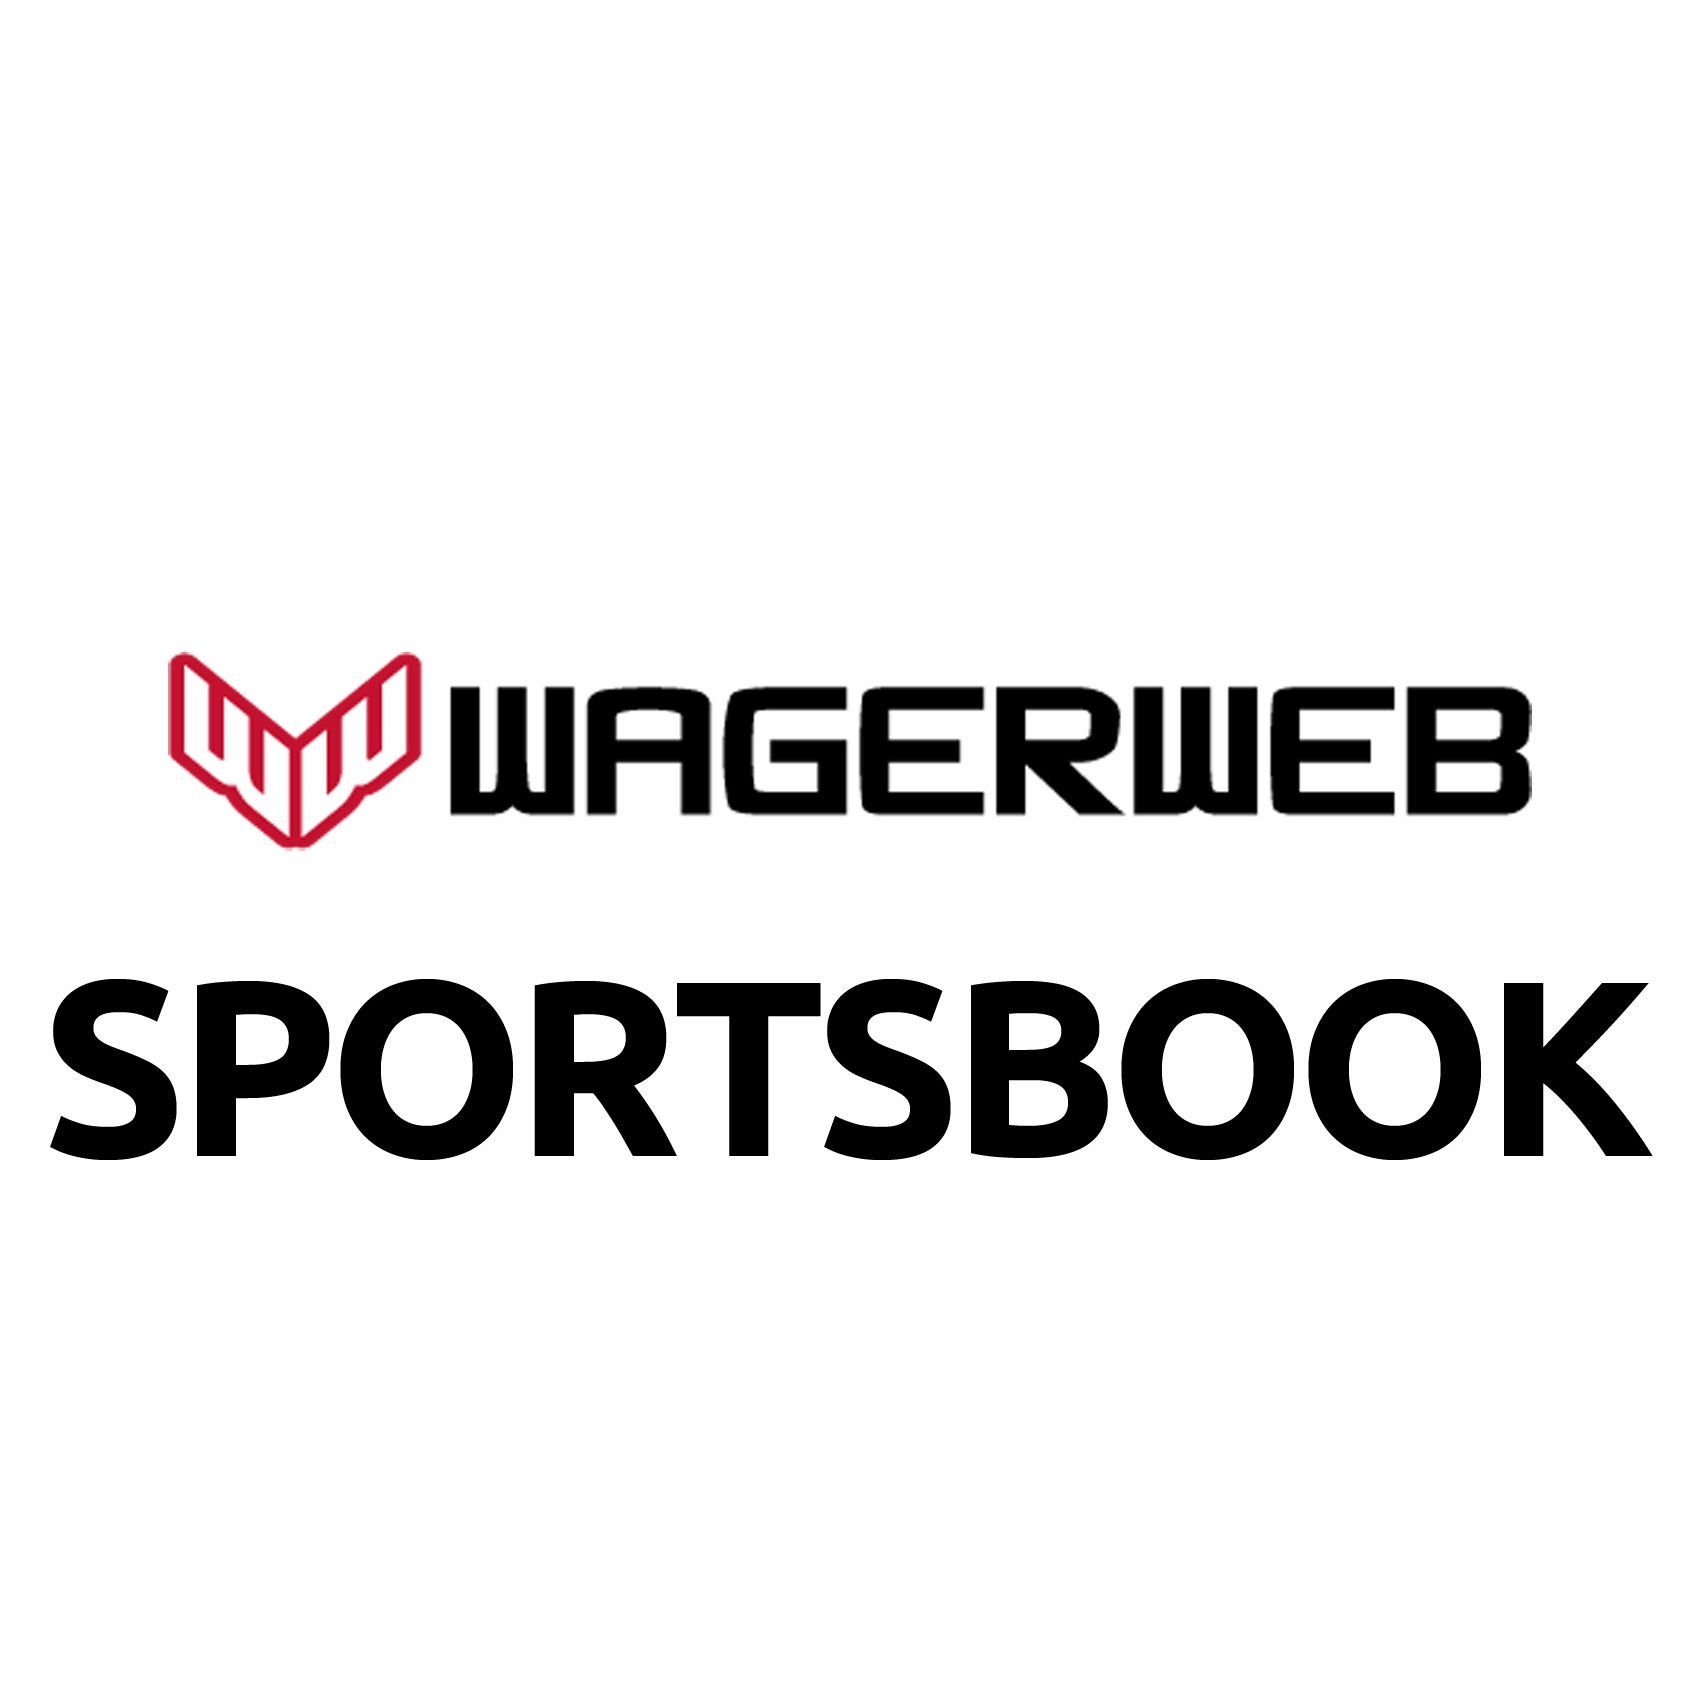 Wagerweb sportsbook cashback bonus